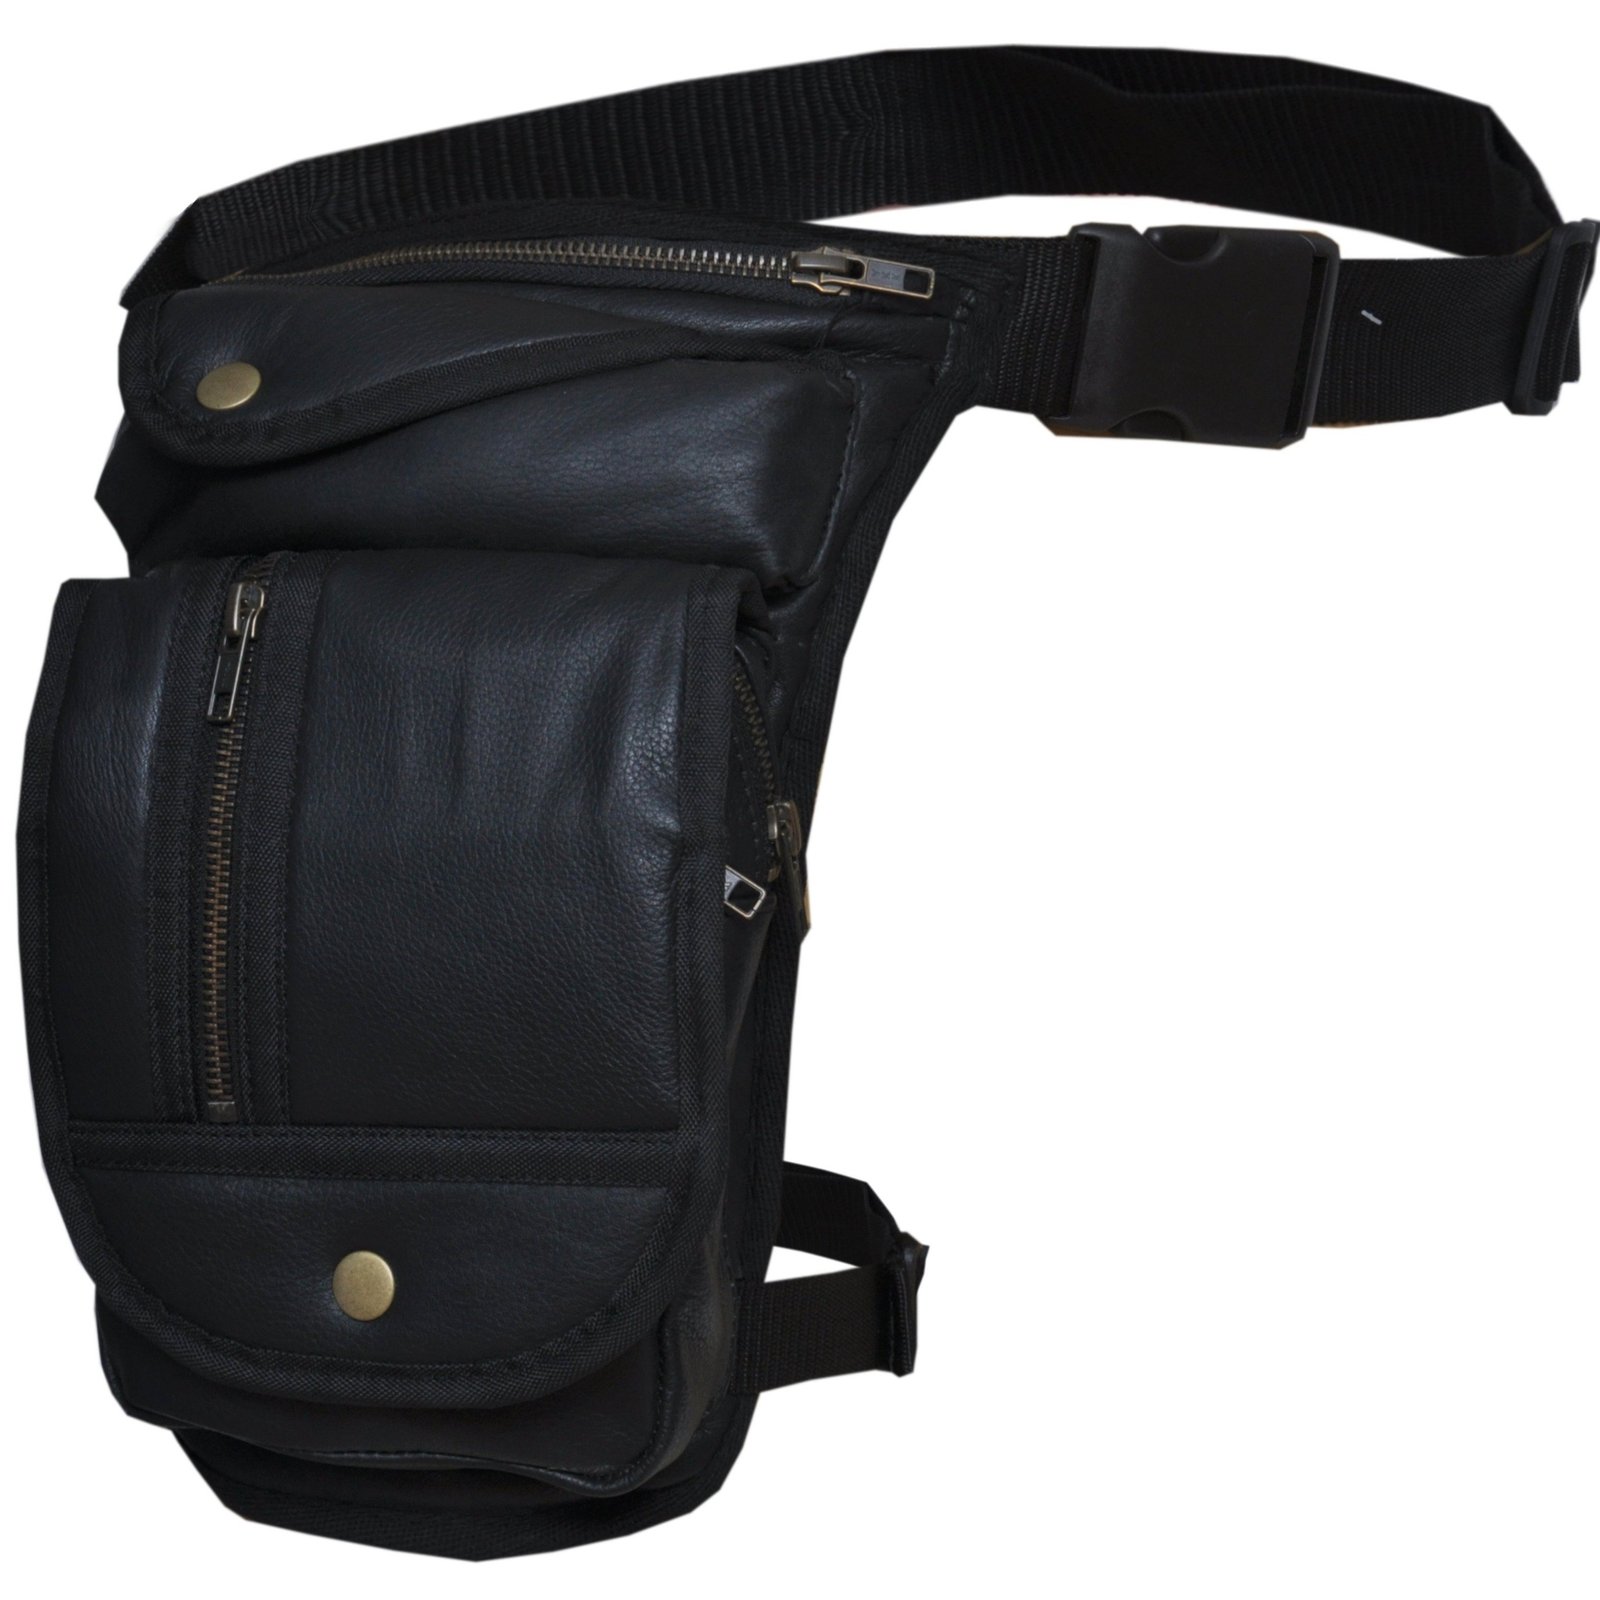 Leather Thigh Bags - Women's - Black - 9799-00-UN